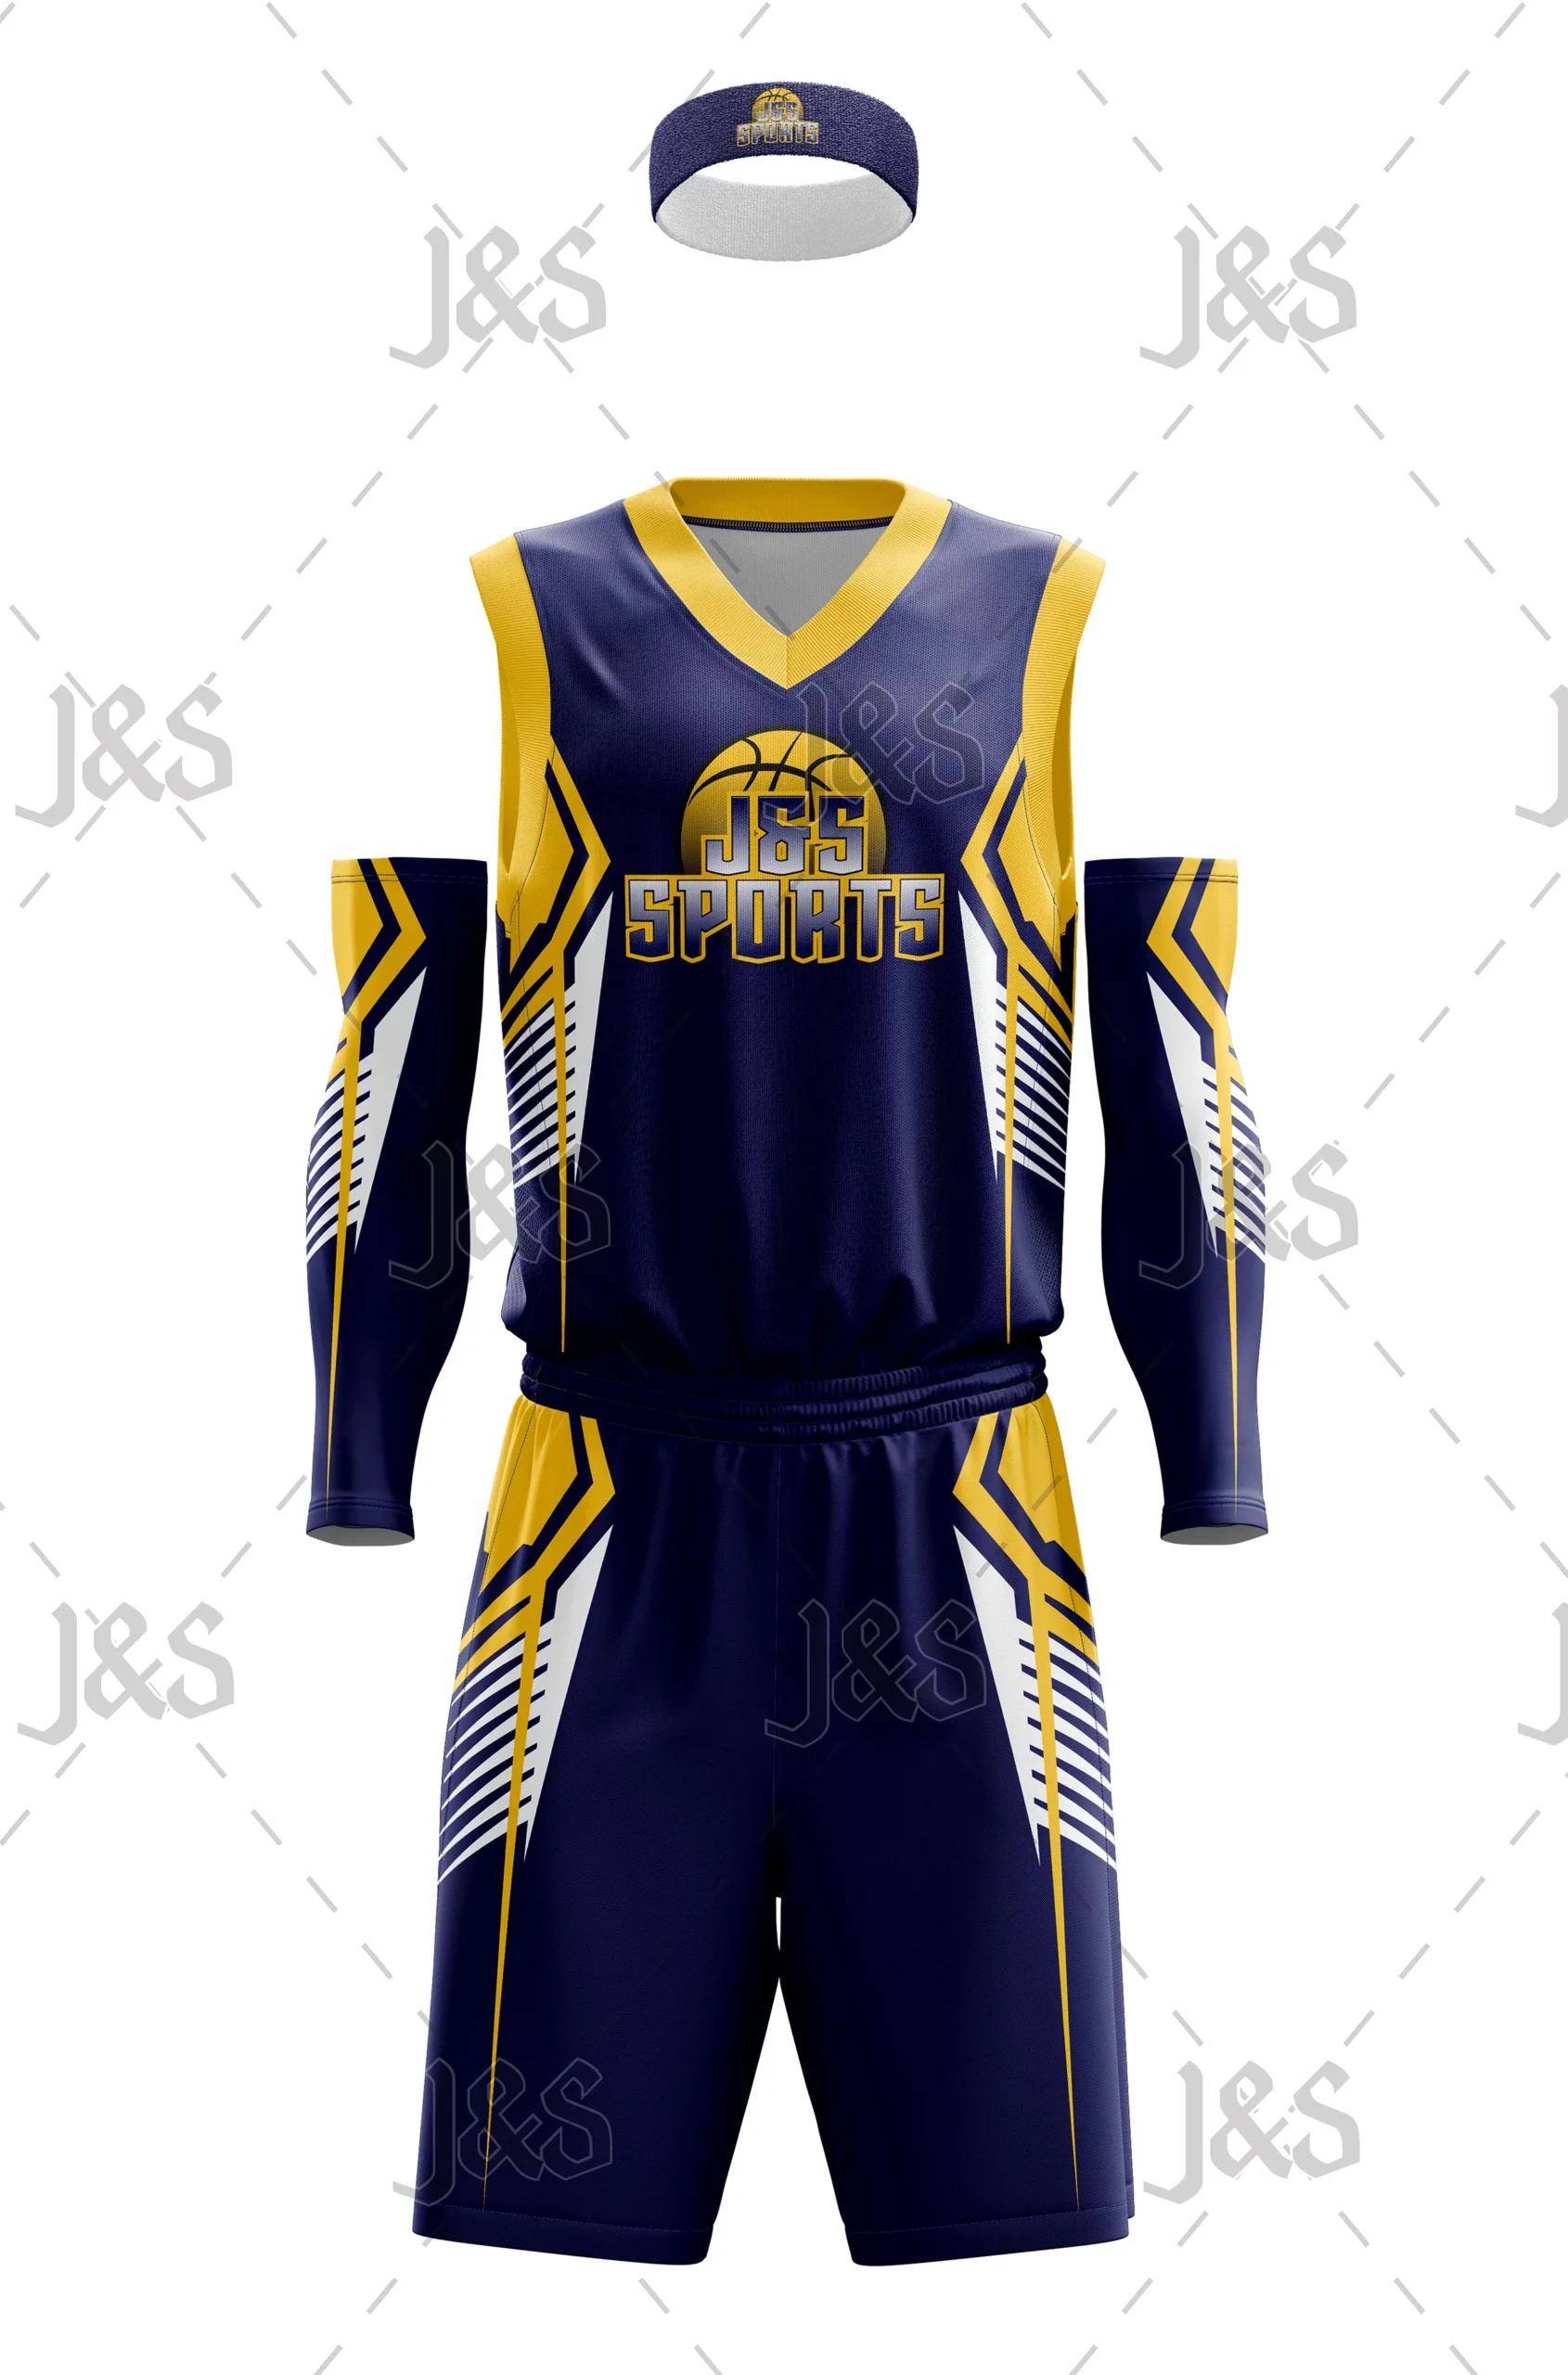 Ynwa NS Youth Basketball Uniform with Customization Option, Aqua